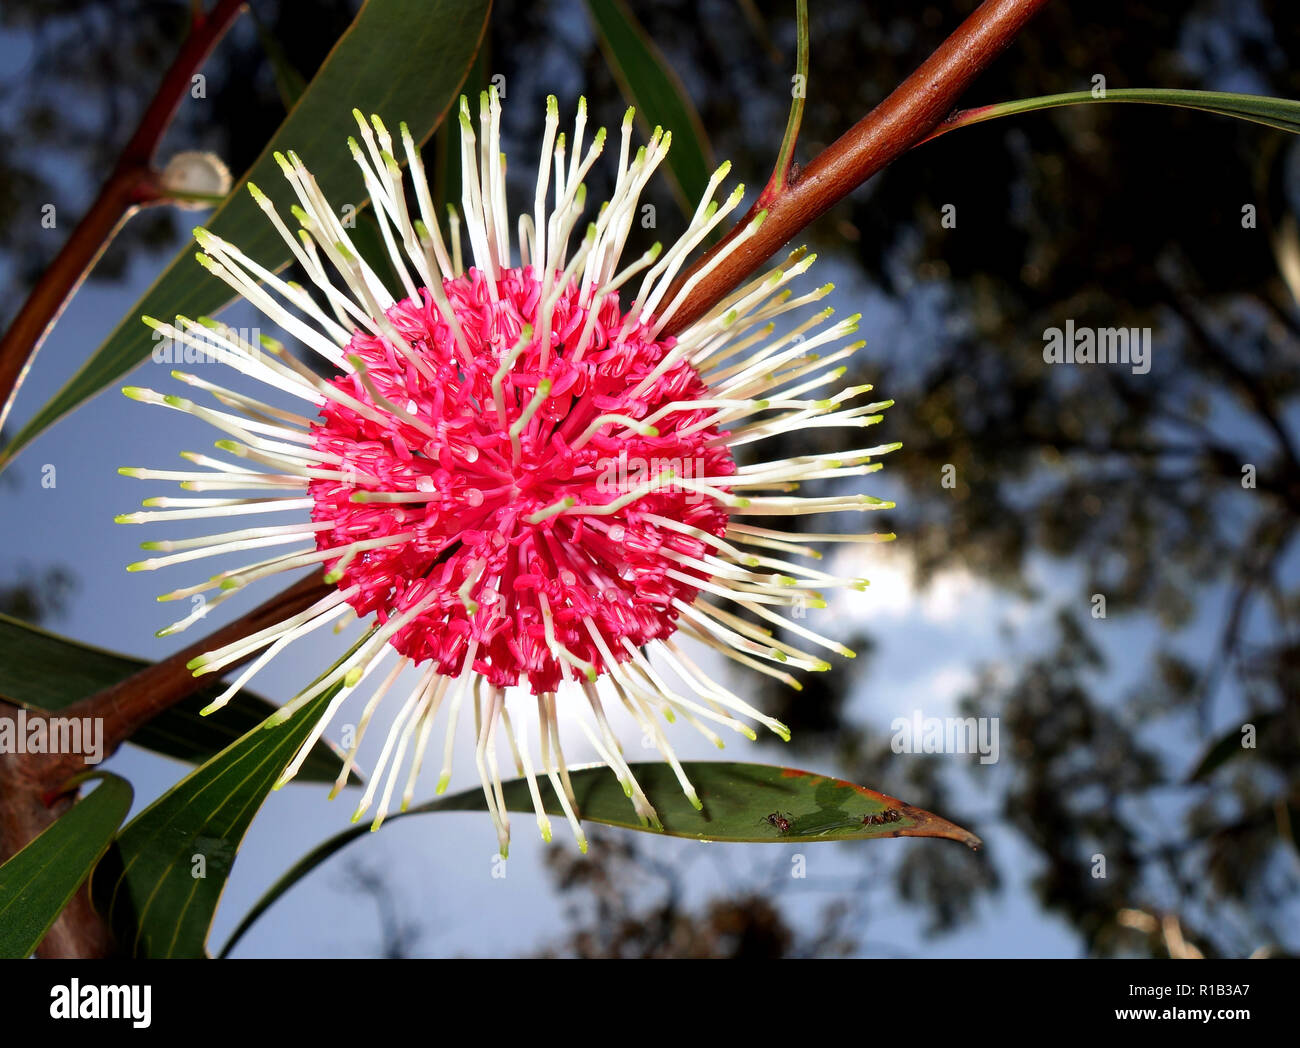 Sea urchin hakea (Hakea petiolaris) flowering in winter, Perth, Western Australia Stock Photo